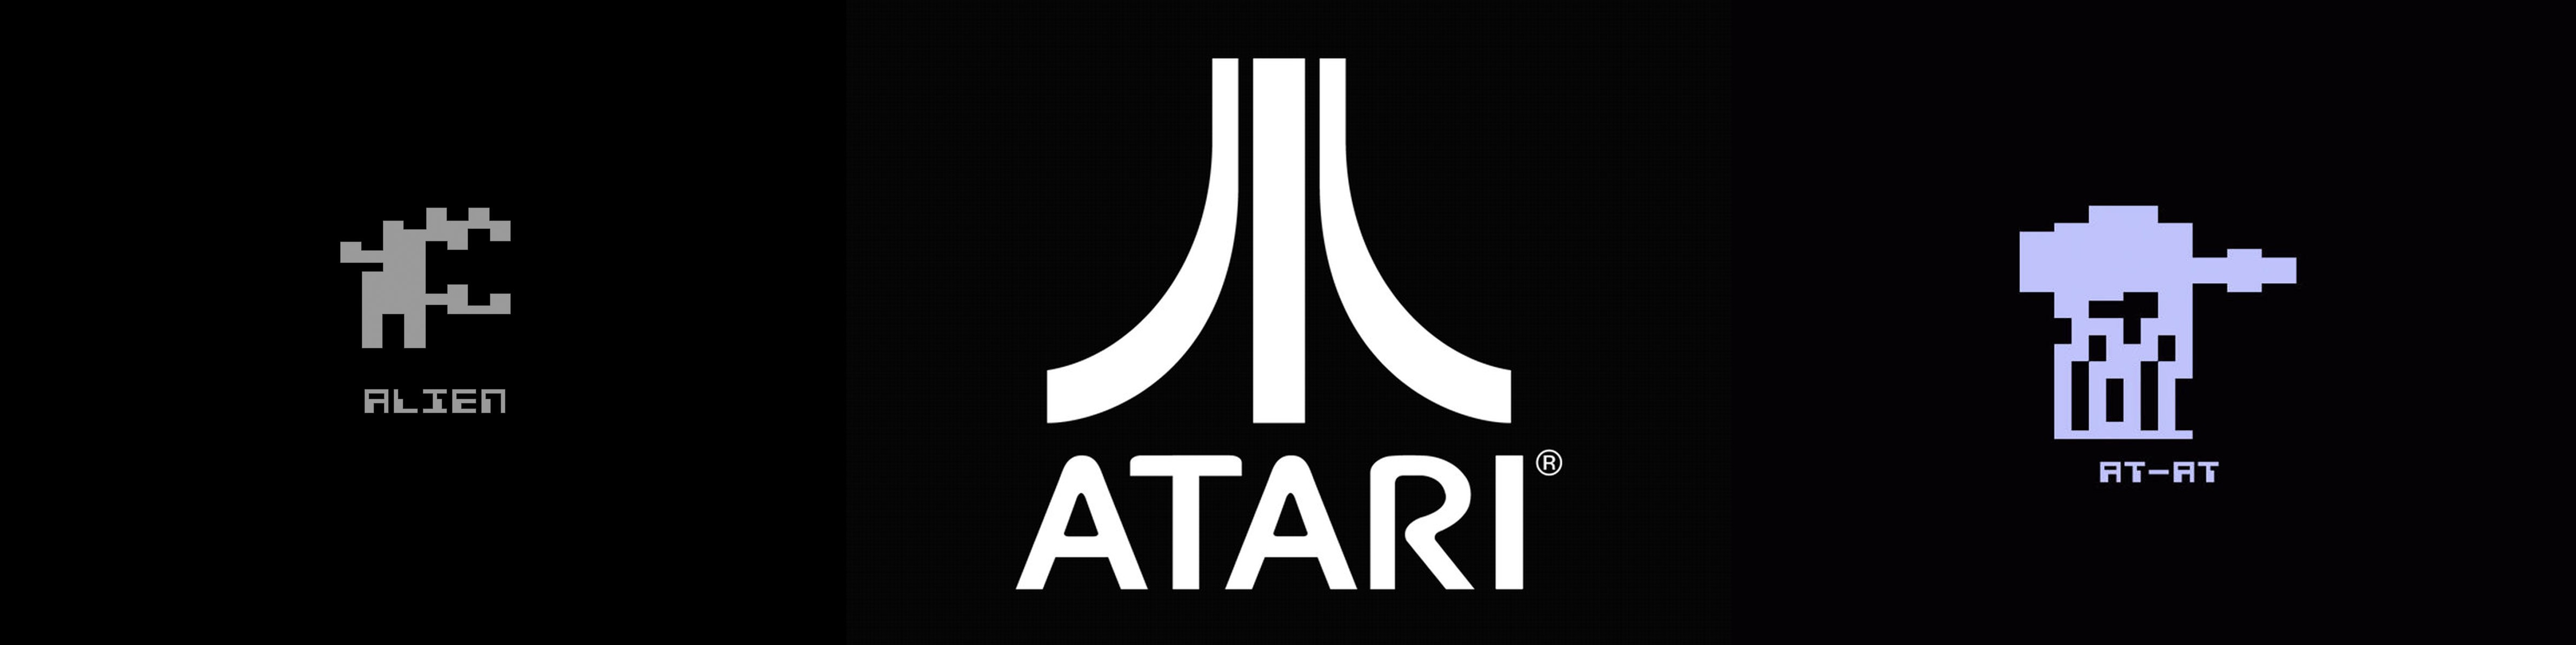 General 4765x1194 Atari retro games video games collage minimalism video game art logo monochrome